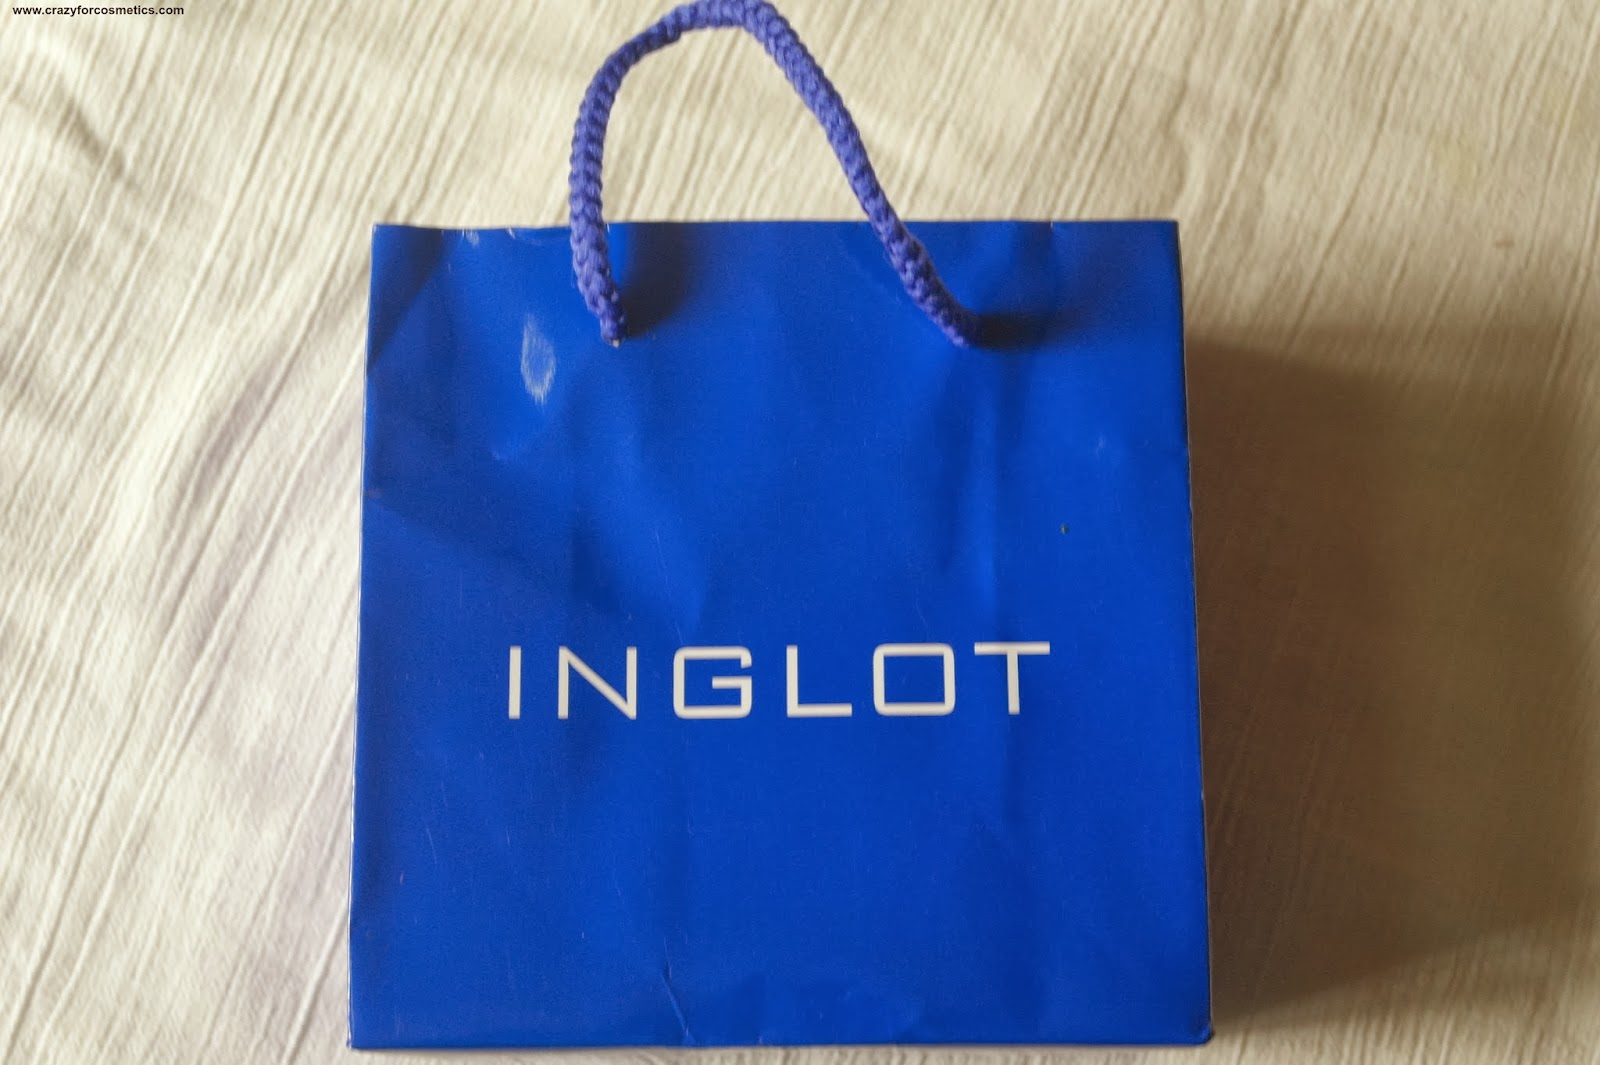 Inglot Haul-Inglot products-Inglot makeup-Inglot eyeshadows-Inglot freedom system palette